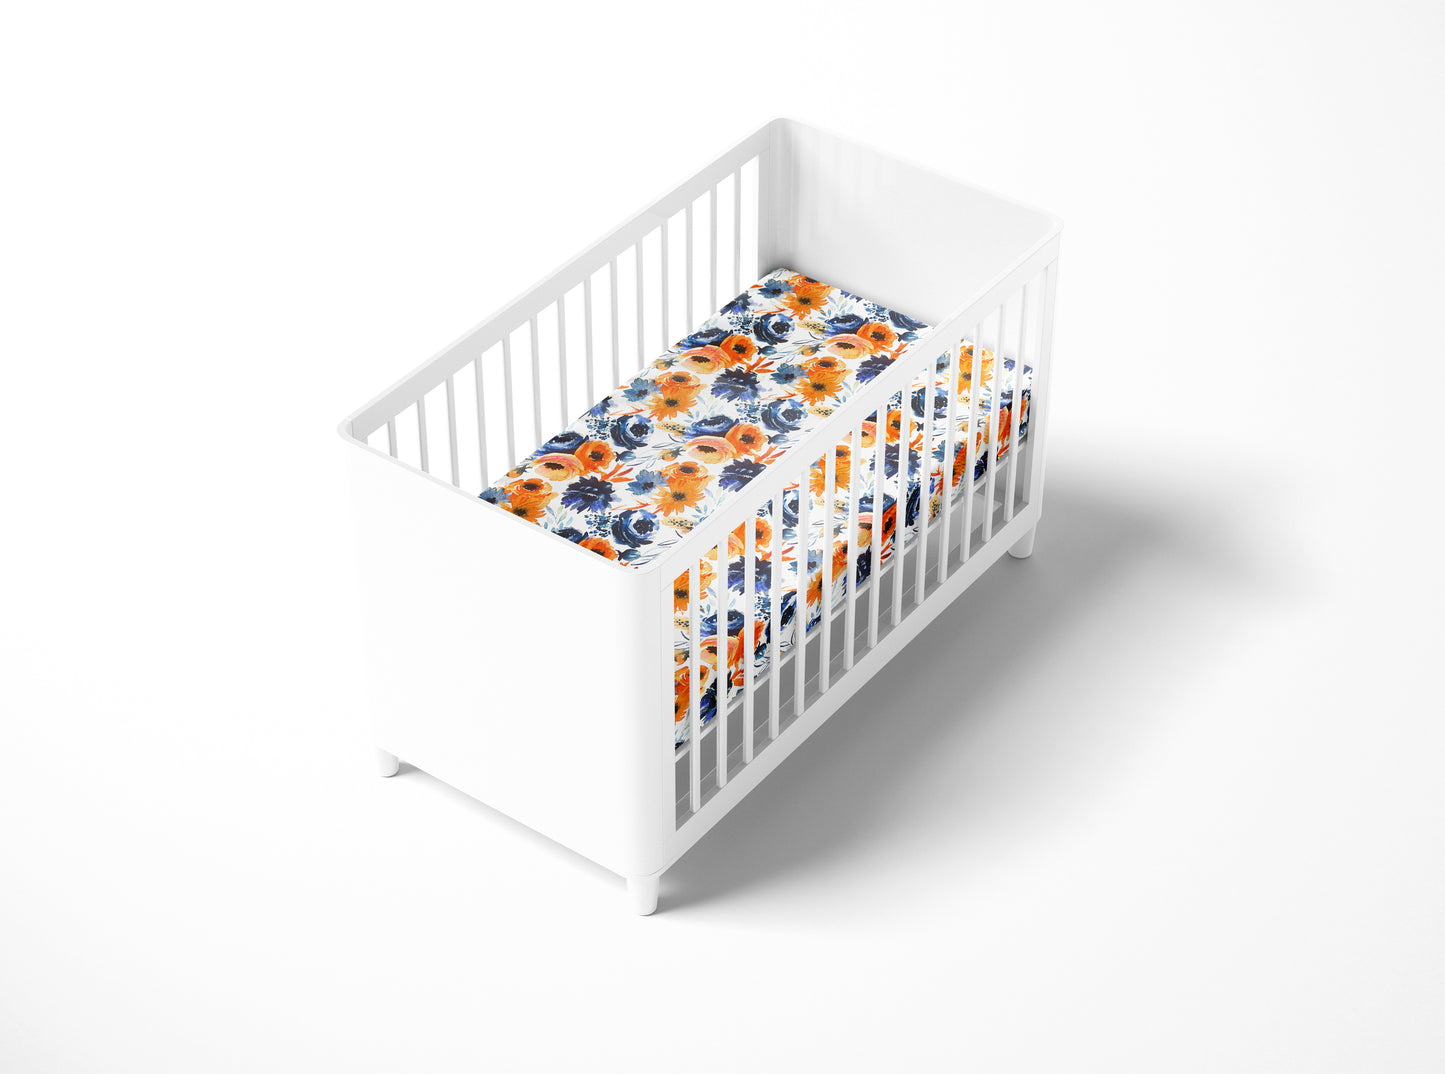 Mini Crib / Pack N Play Sheet | Navy Orange Floral - One Kind Clothing, LLC